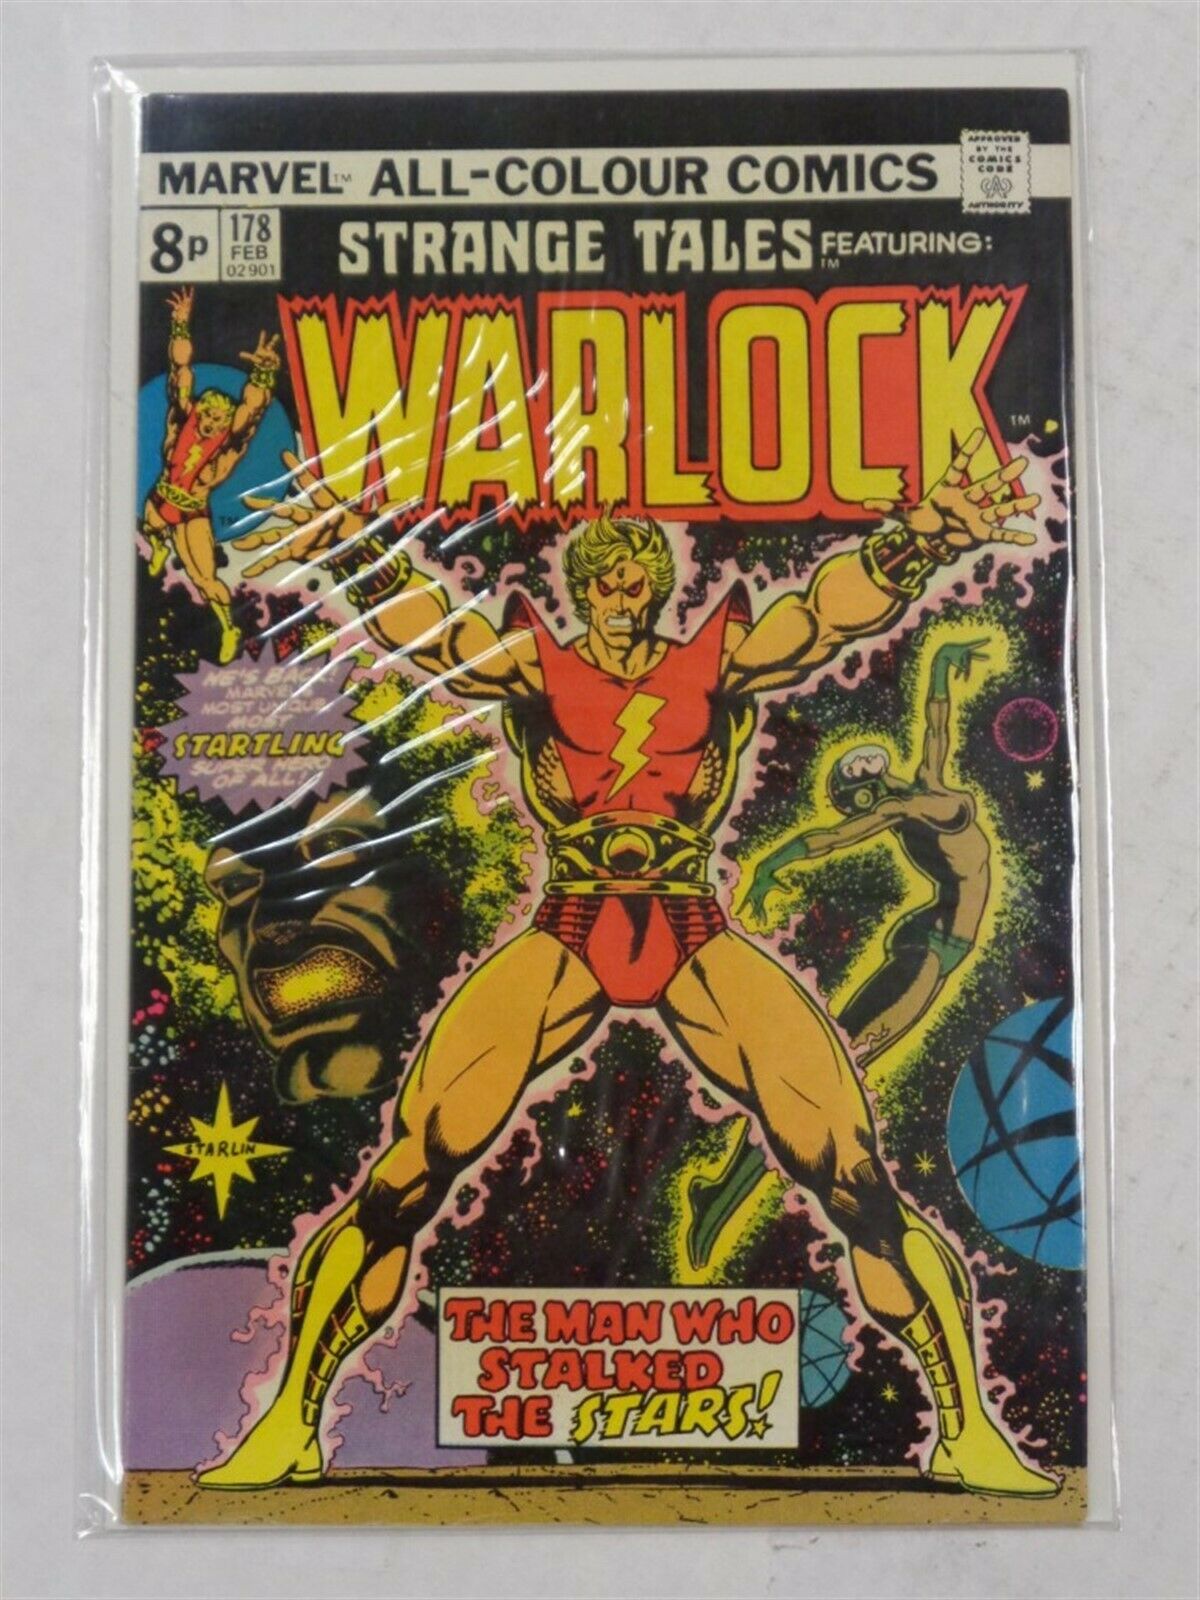 STRANGE TALES WARLOCK #178 MARVEL COMICS FEBRUARY 1975 NM (9.4)